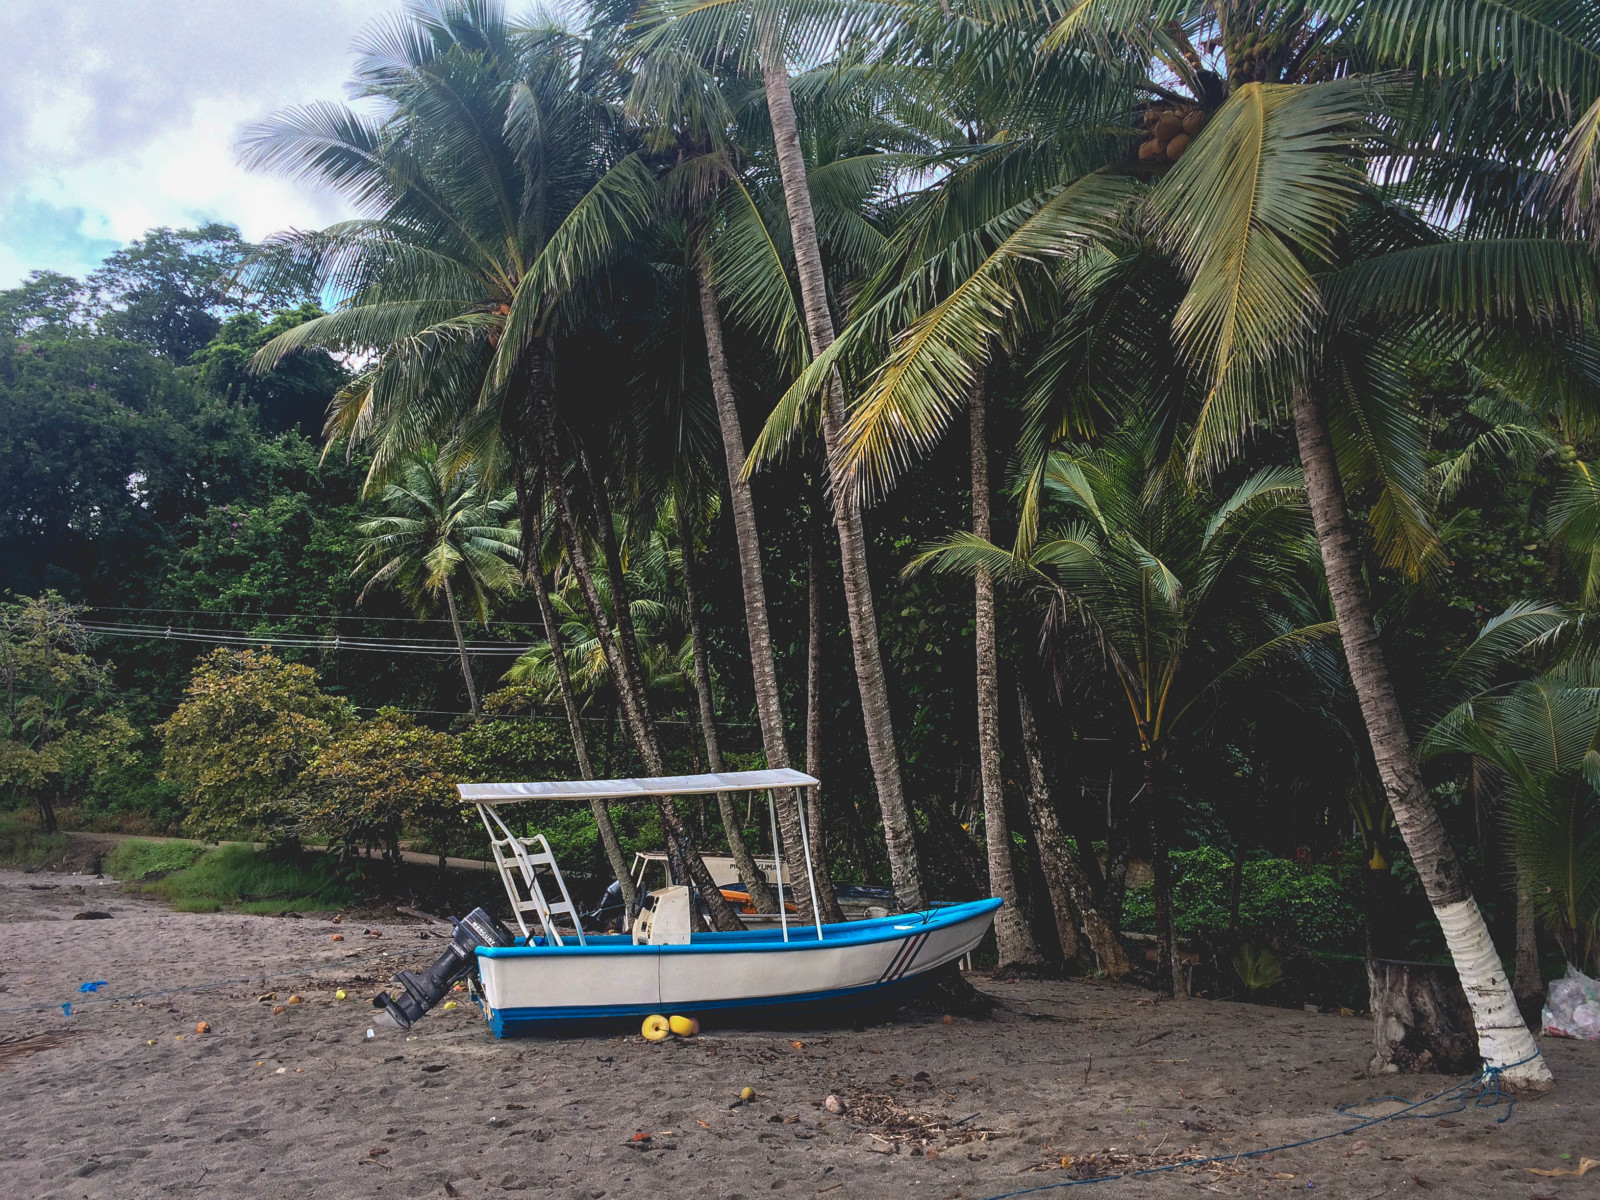 A little boat on the beach in Montezuma